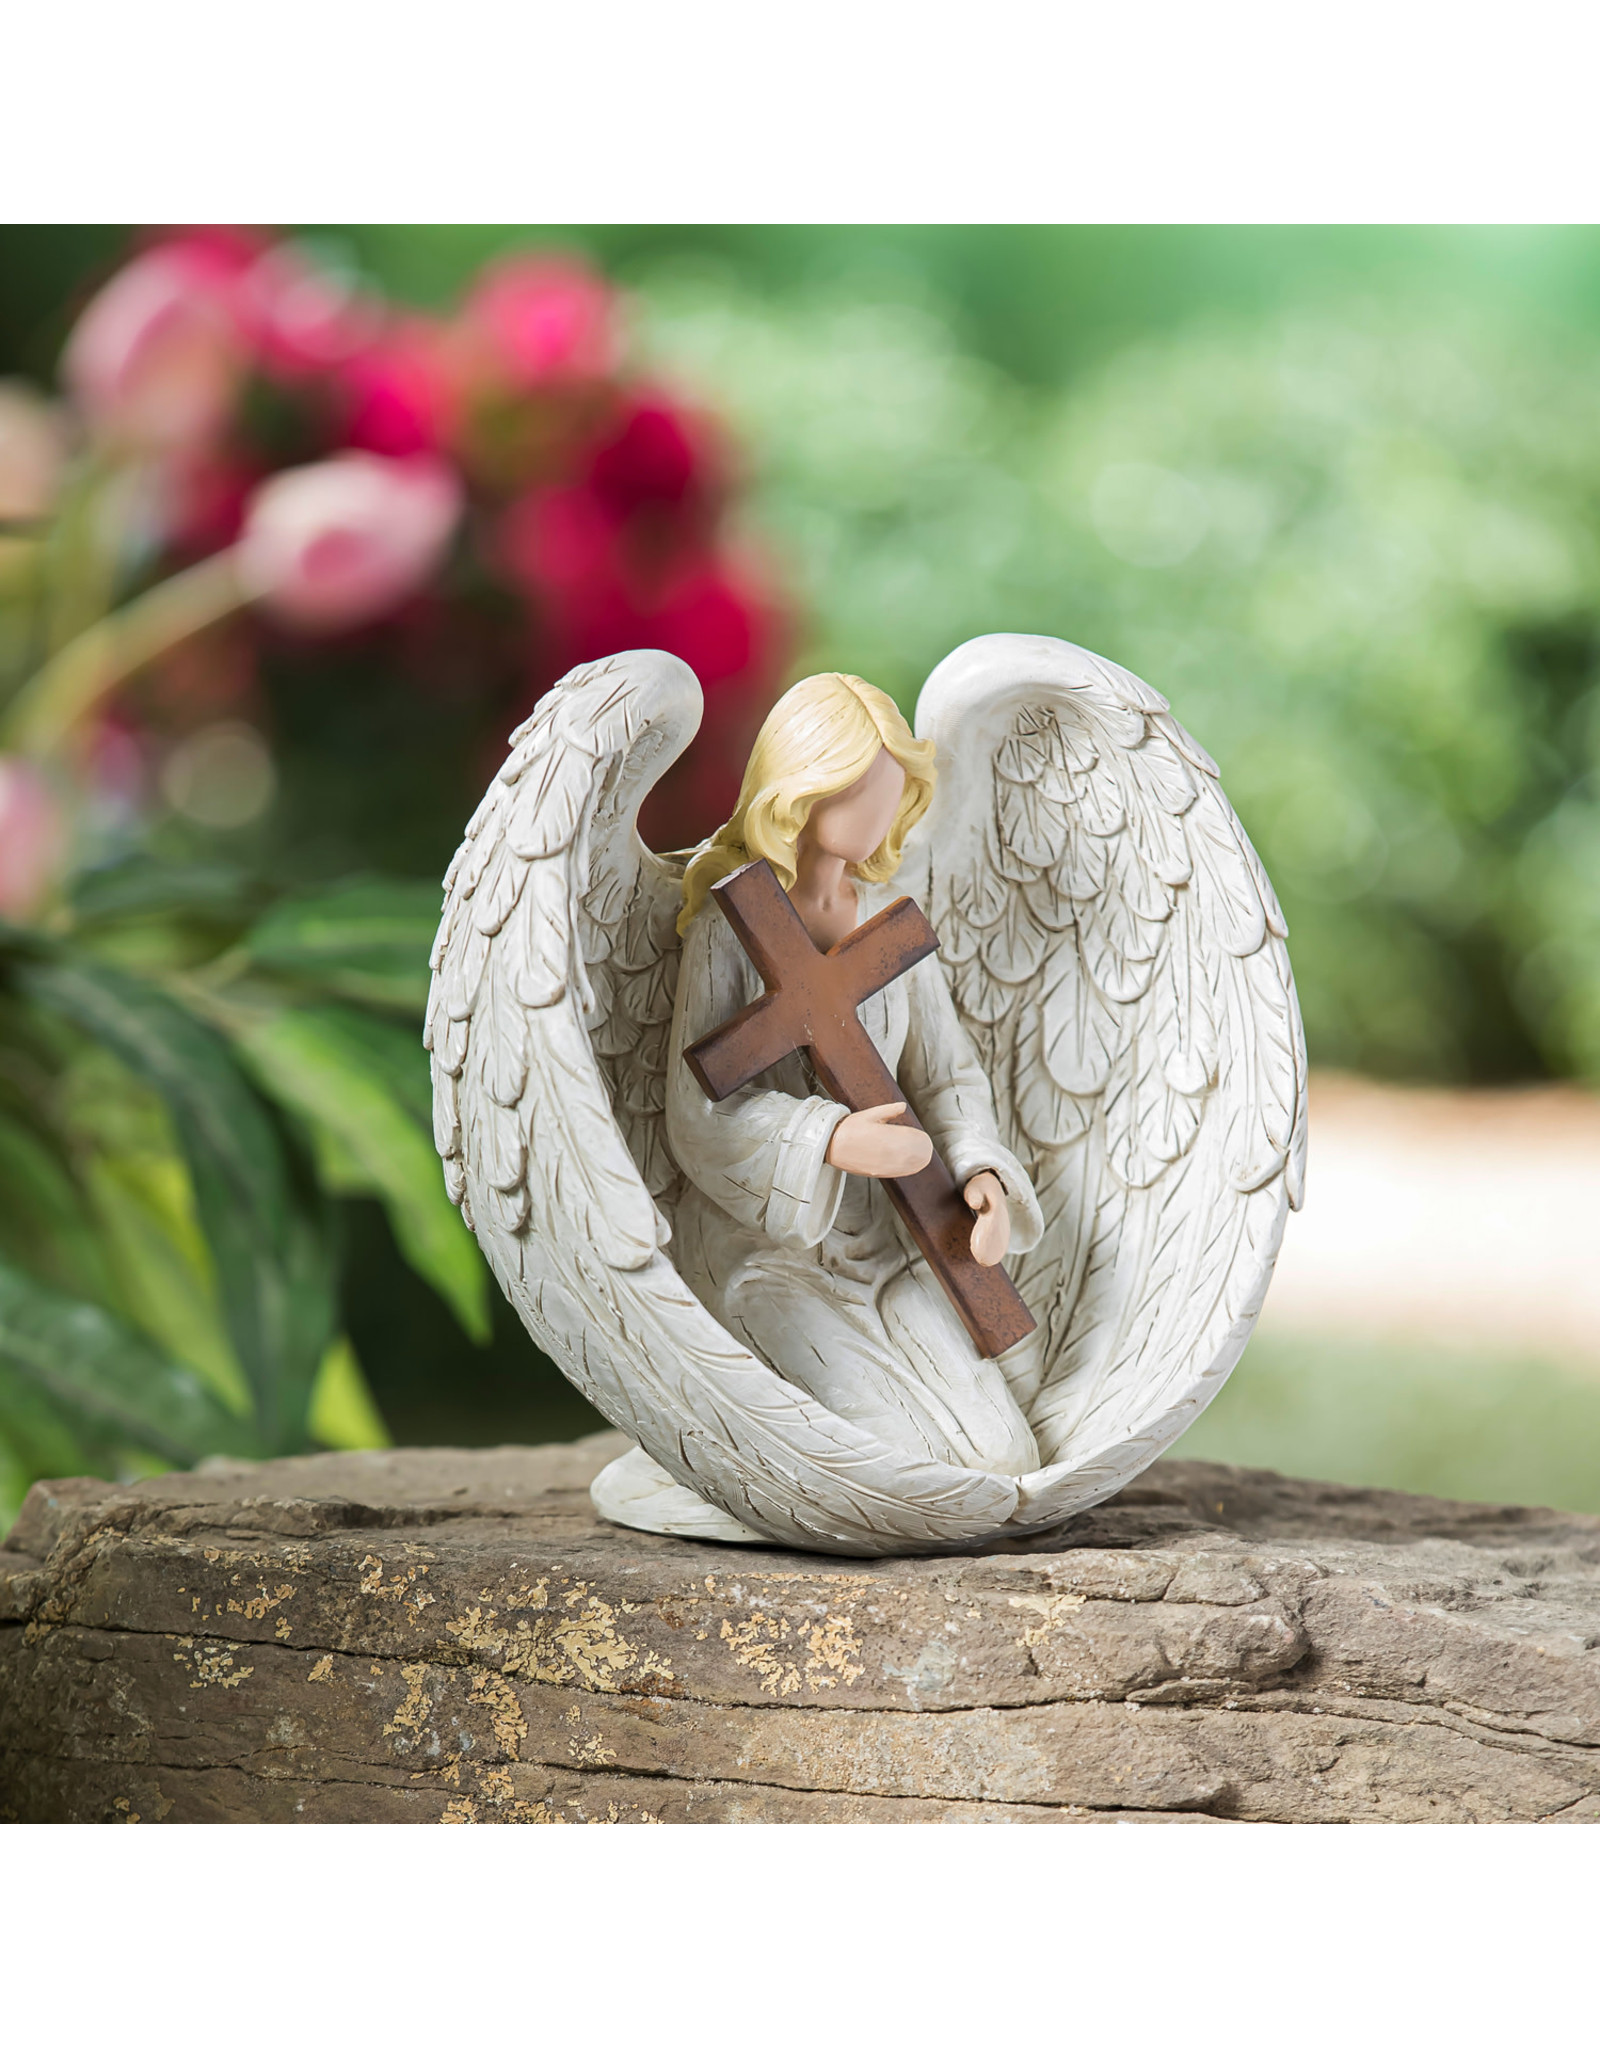 Evergreen Enterprises Angel with Cross Garden Statuary